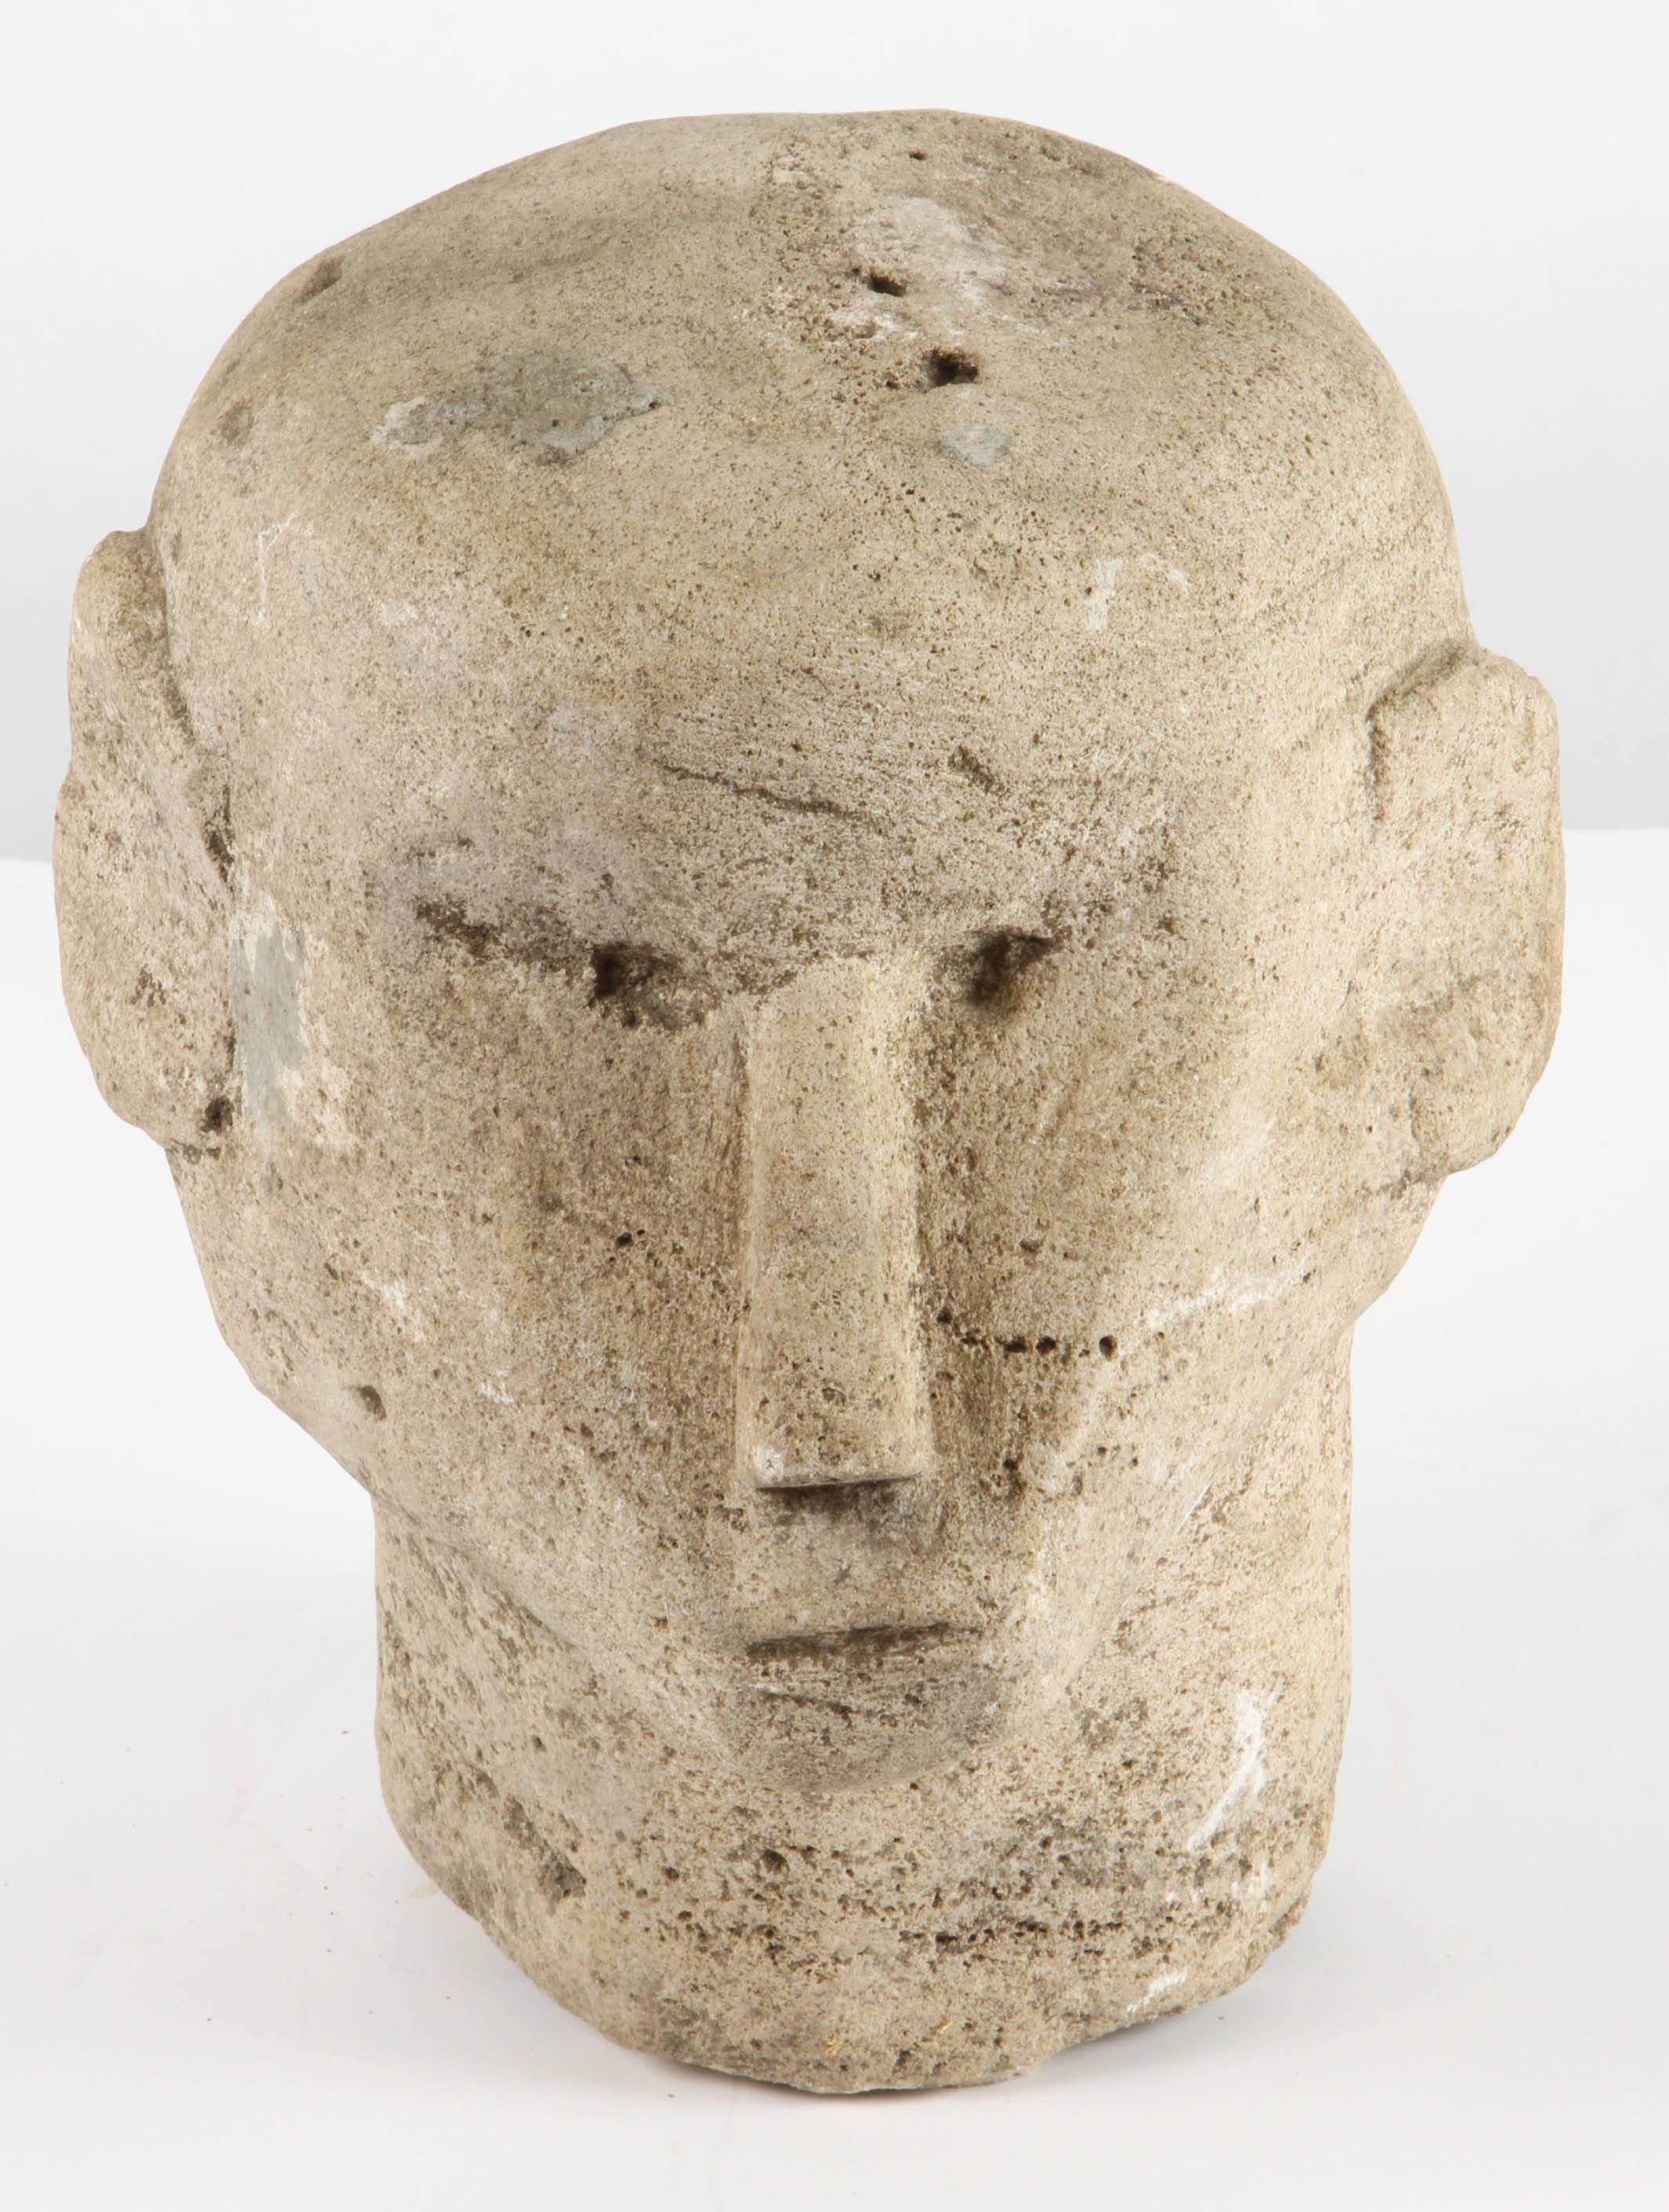 19th century large Aboriginal stone head from Timor, Indonesia.